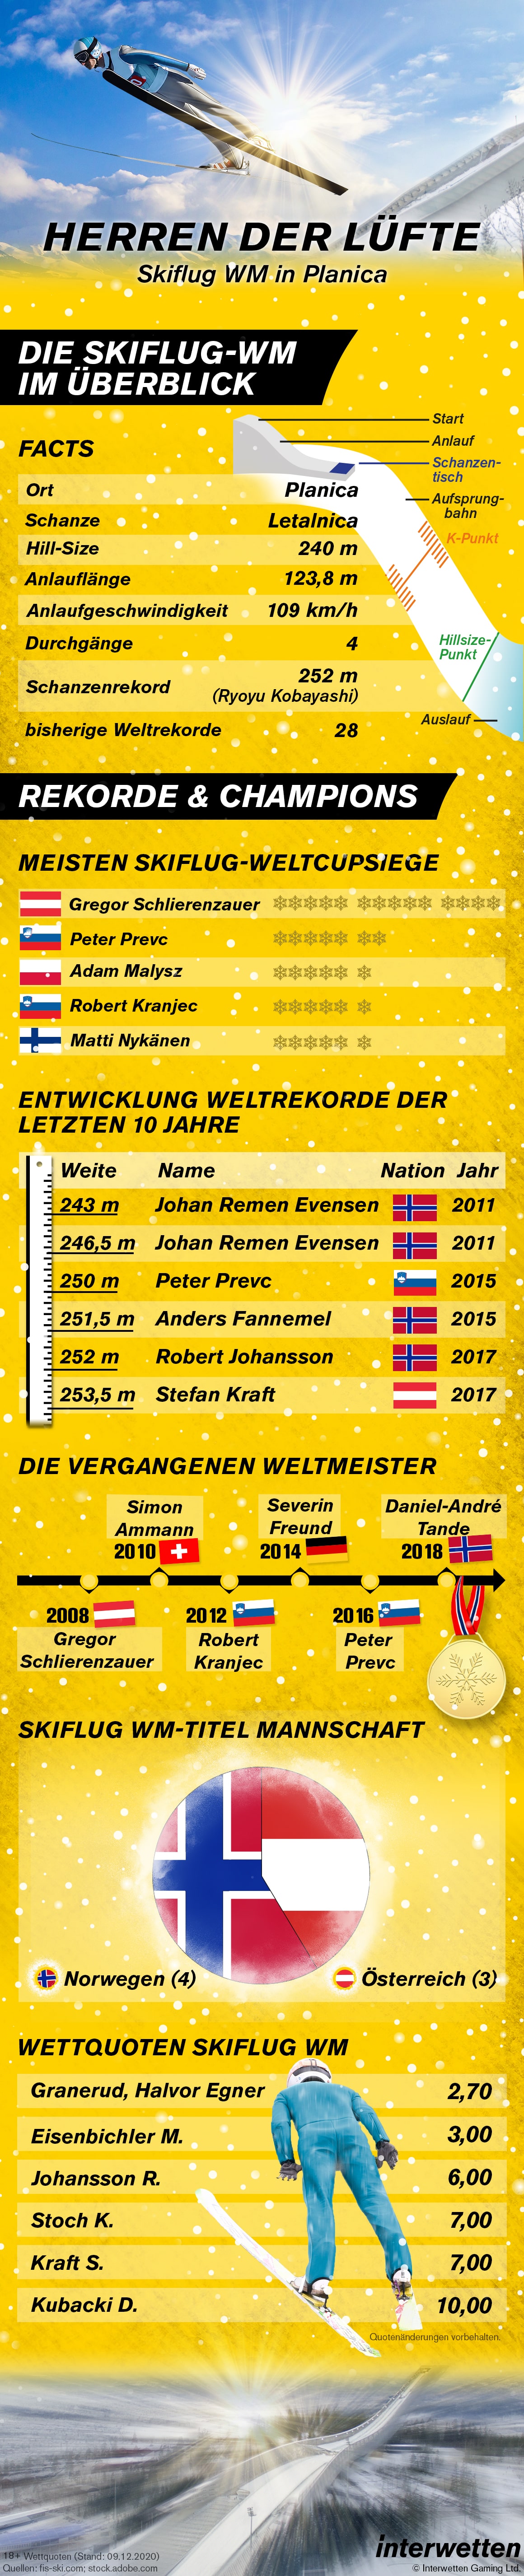 Infografik Interwetten Skiflug WM 11 2020